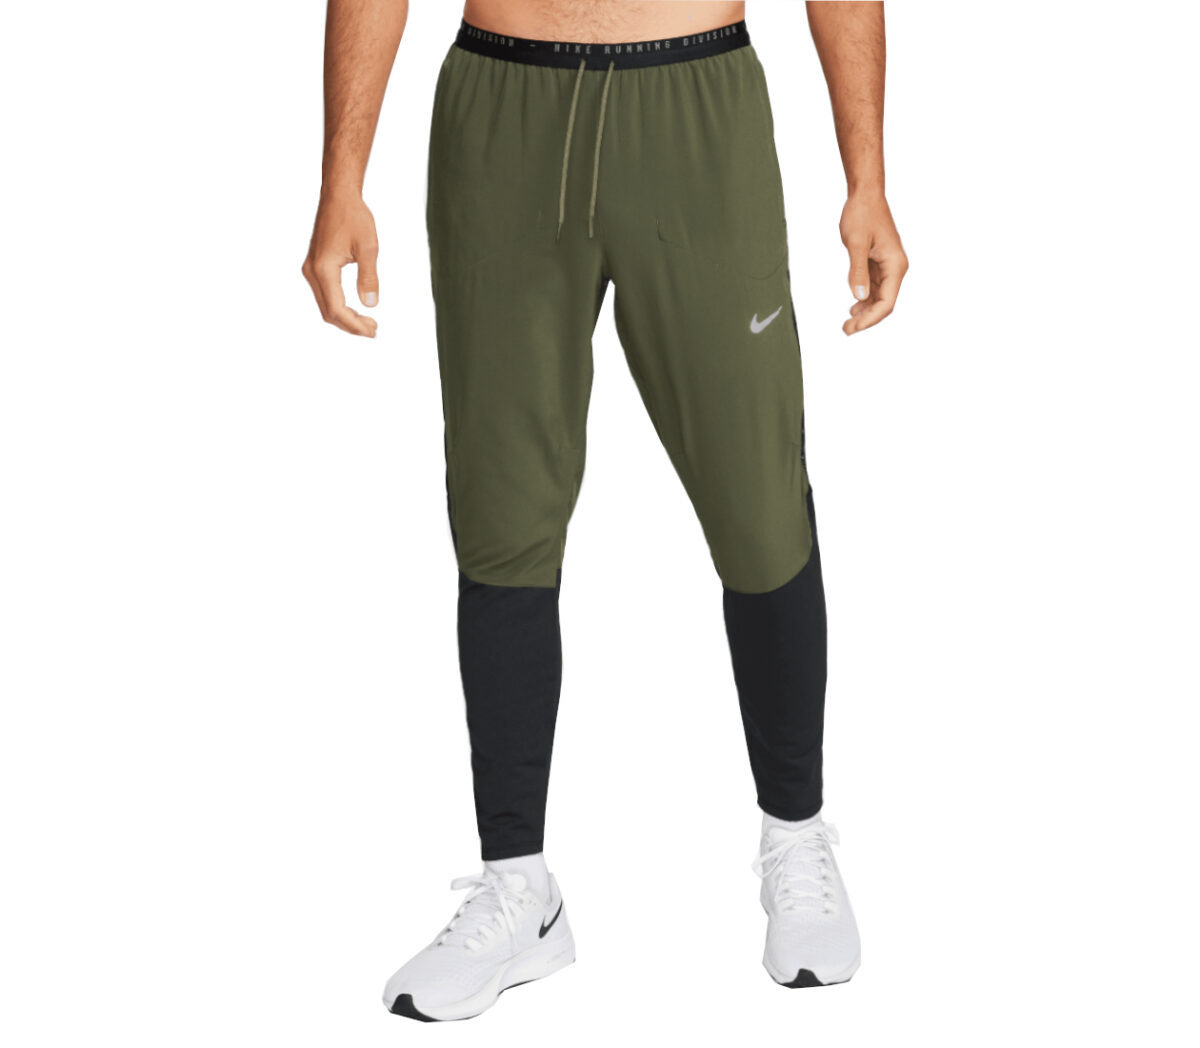 Pantalone Nike dri-fit run division phenom uomo verdi